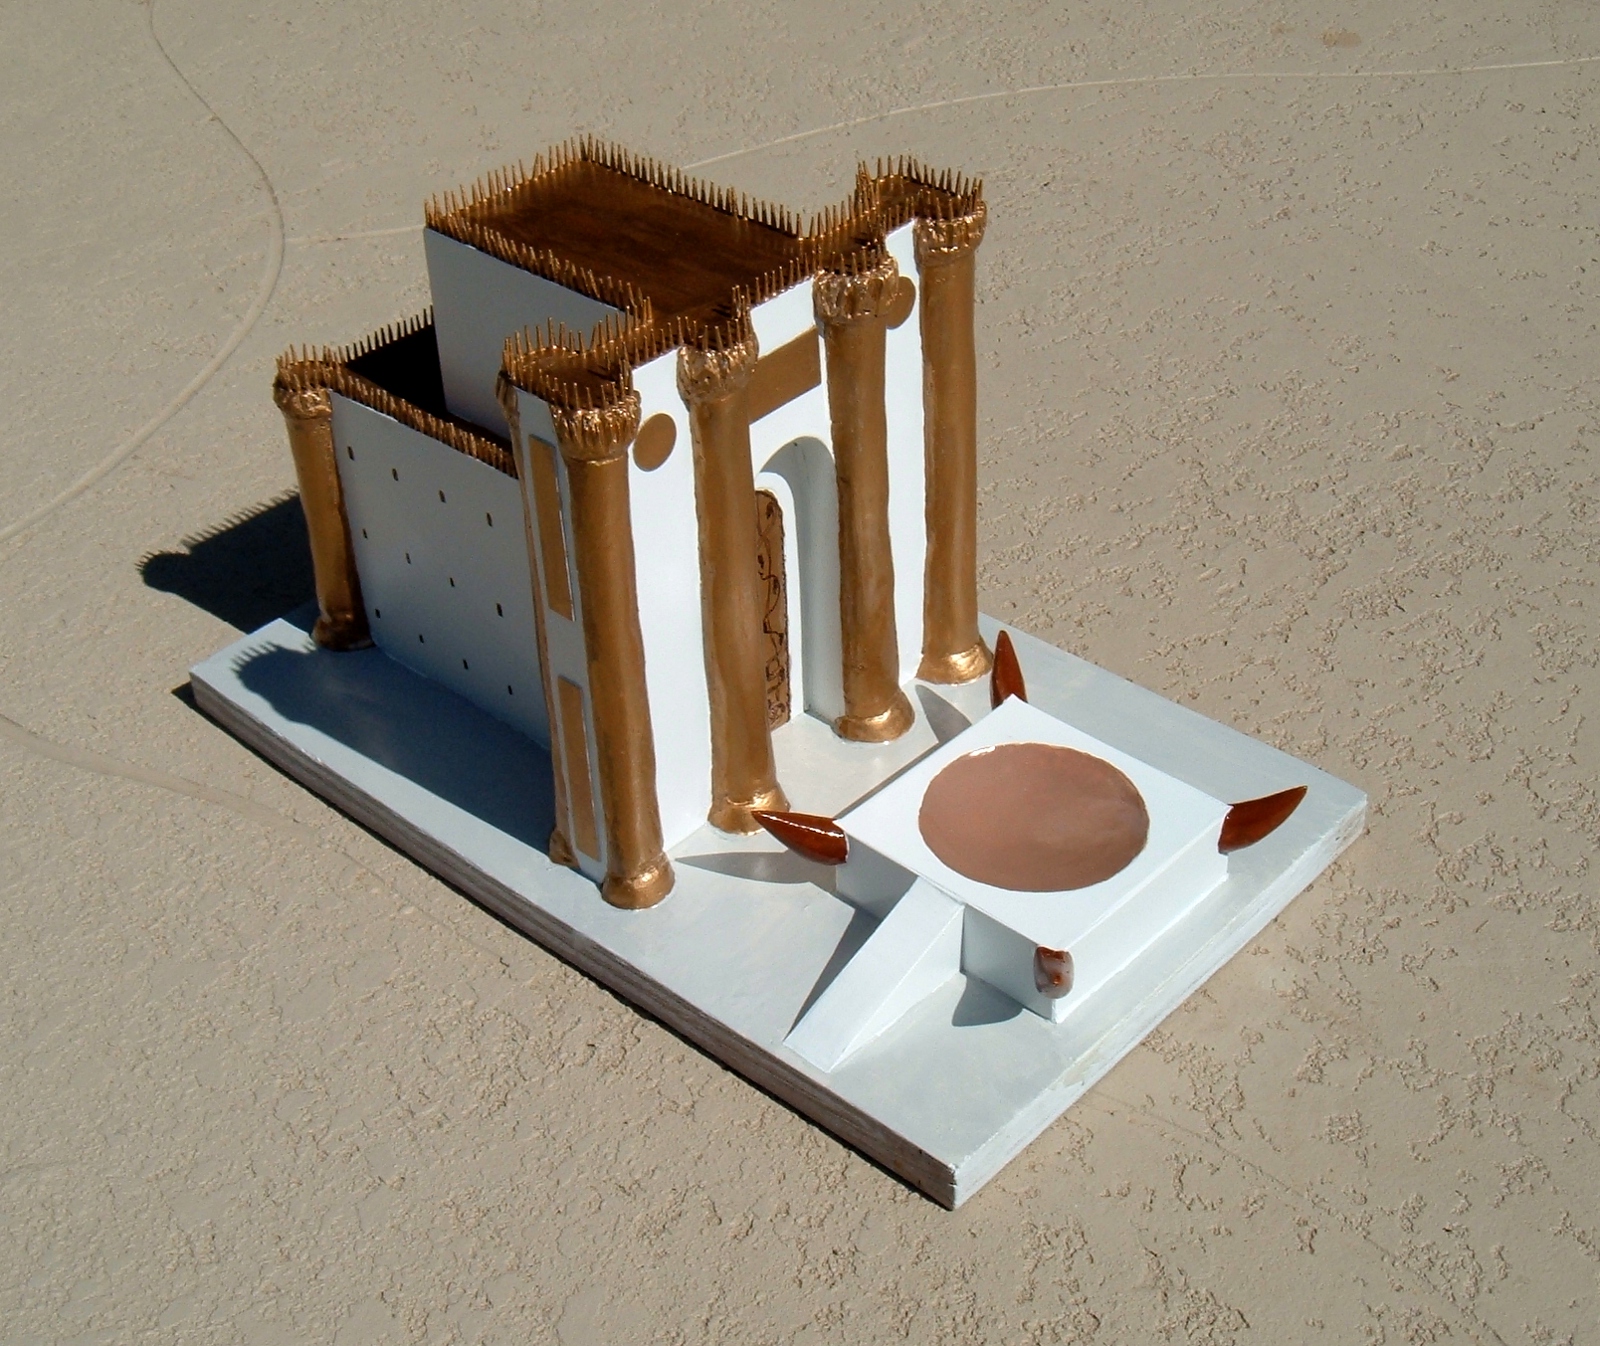 My model of Herod’s Temple, built in 1/250 scale.